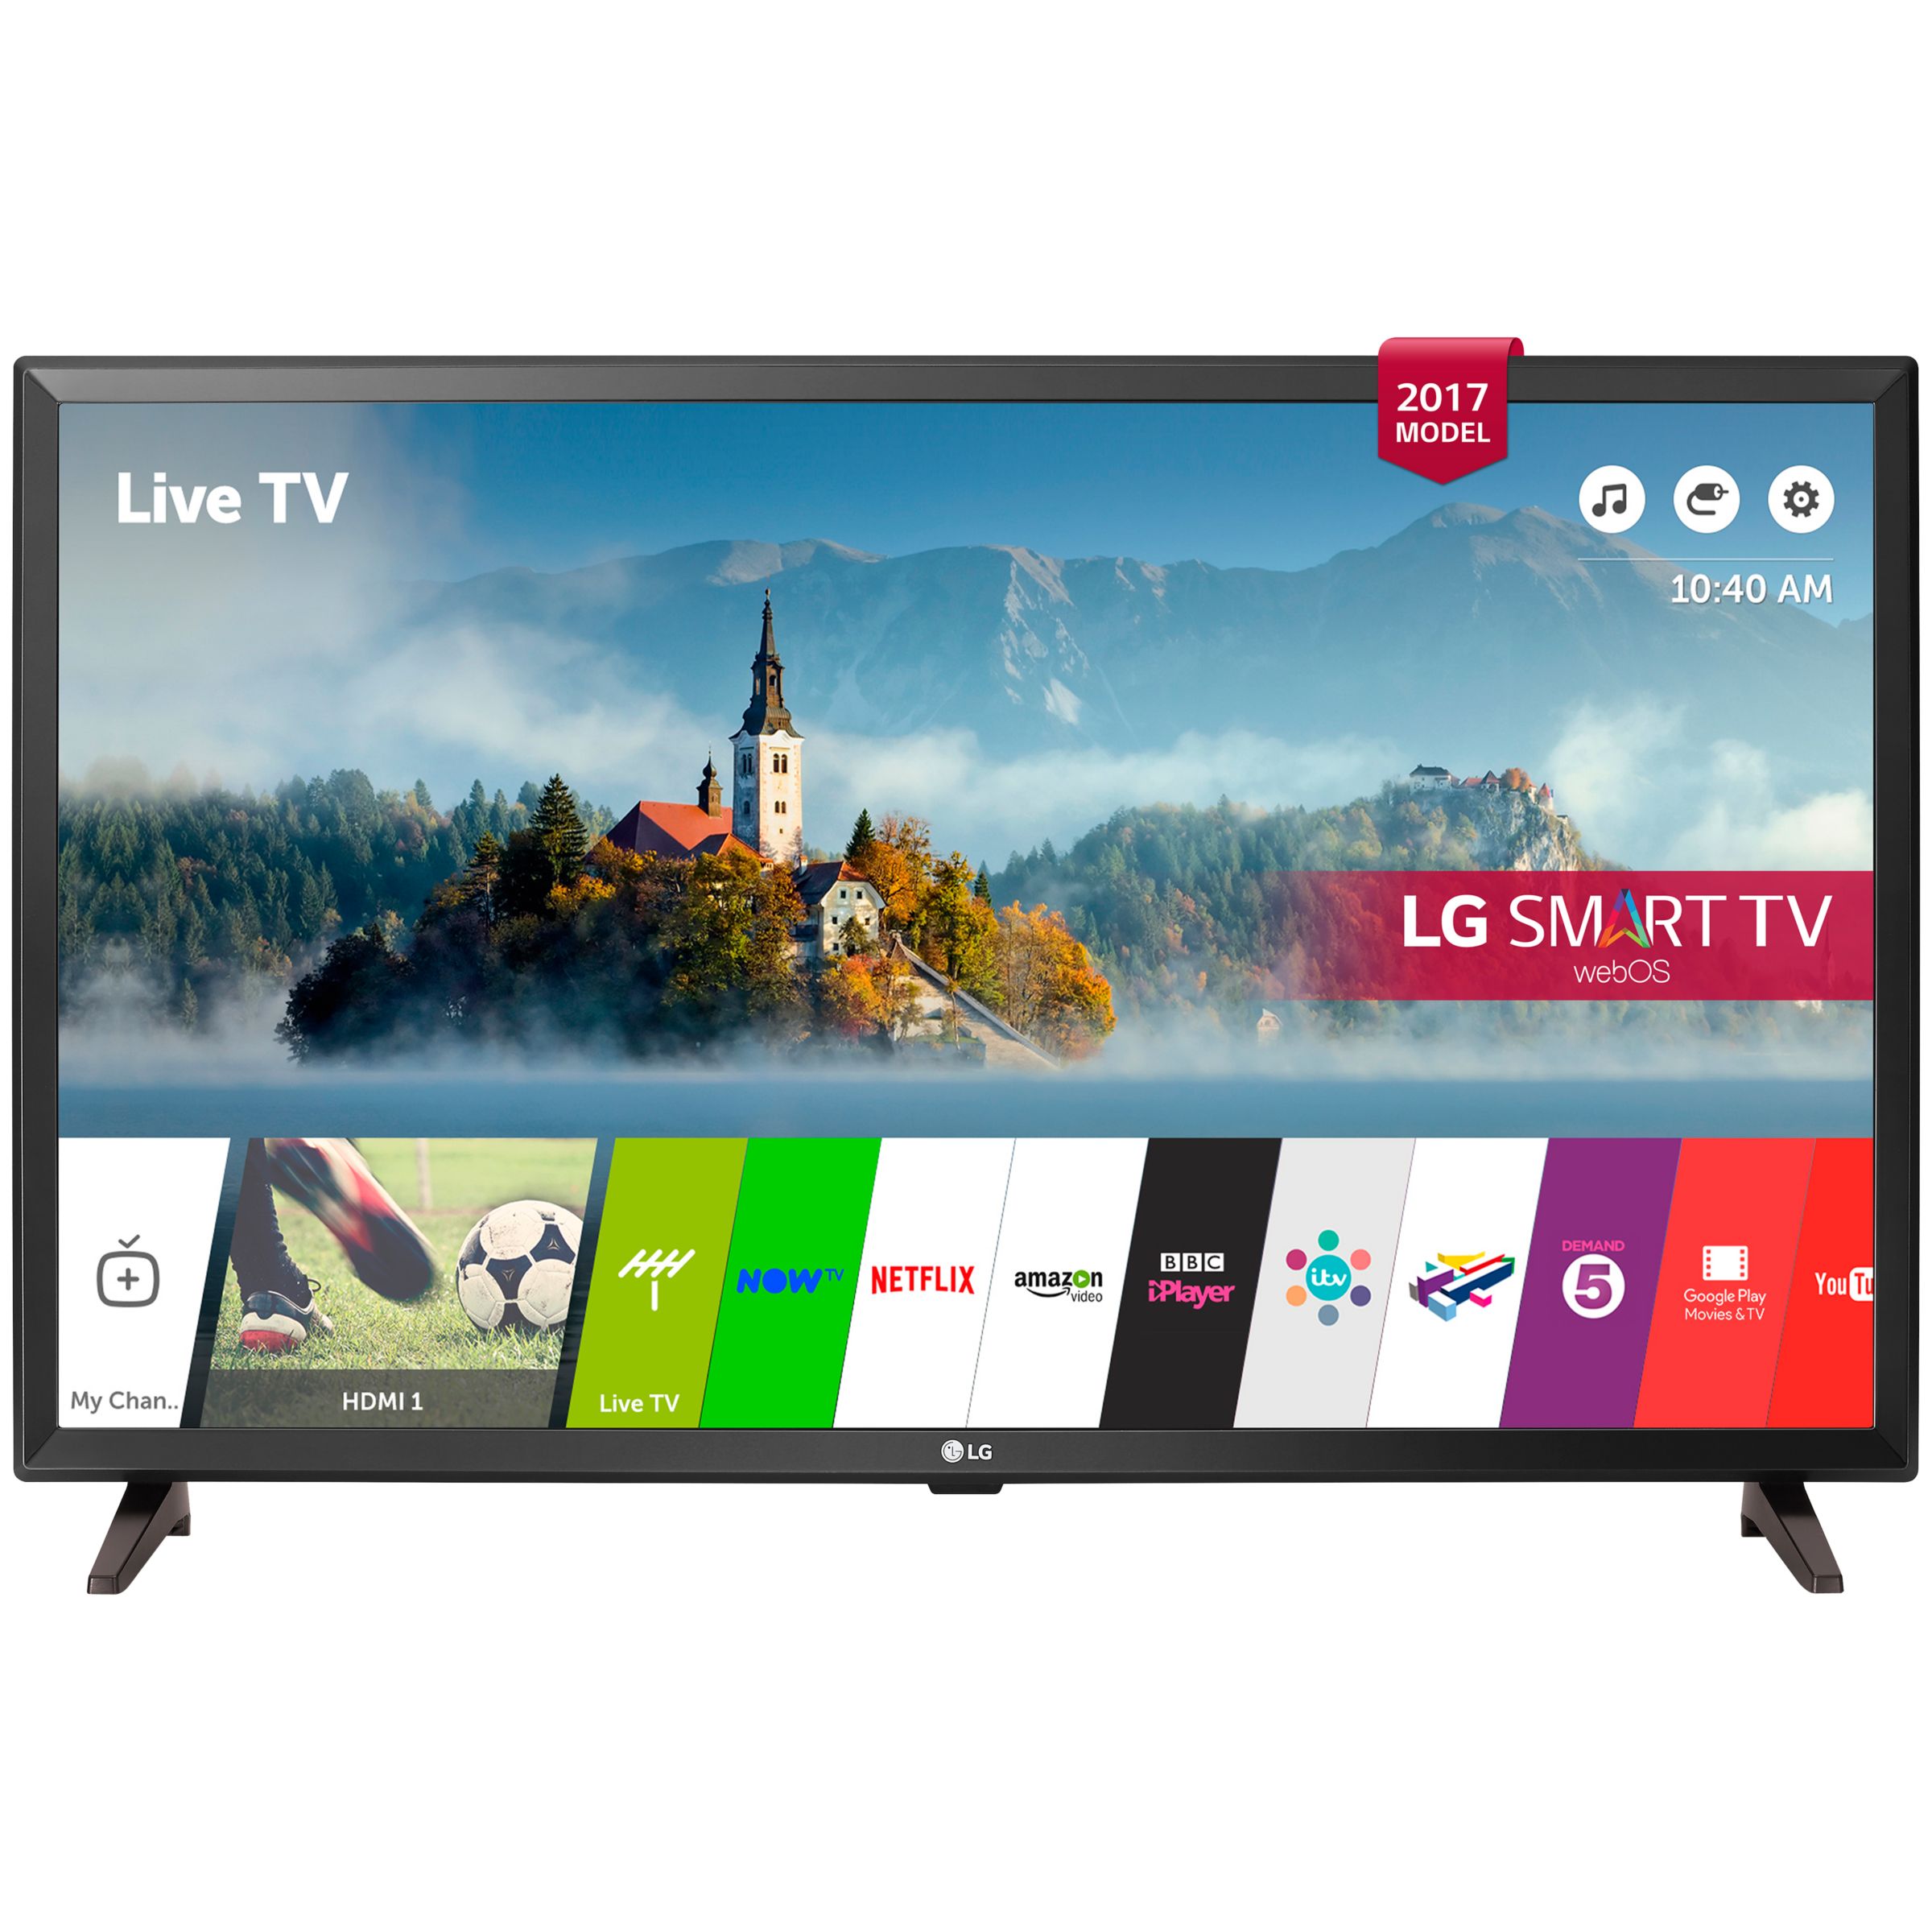 Lg 32lj610v Led Full Hd 1080p Smart Tv 32 With Freesat Hd